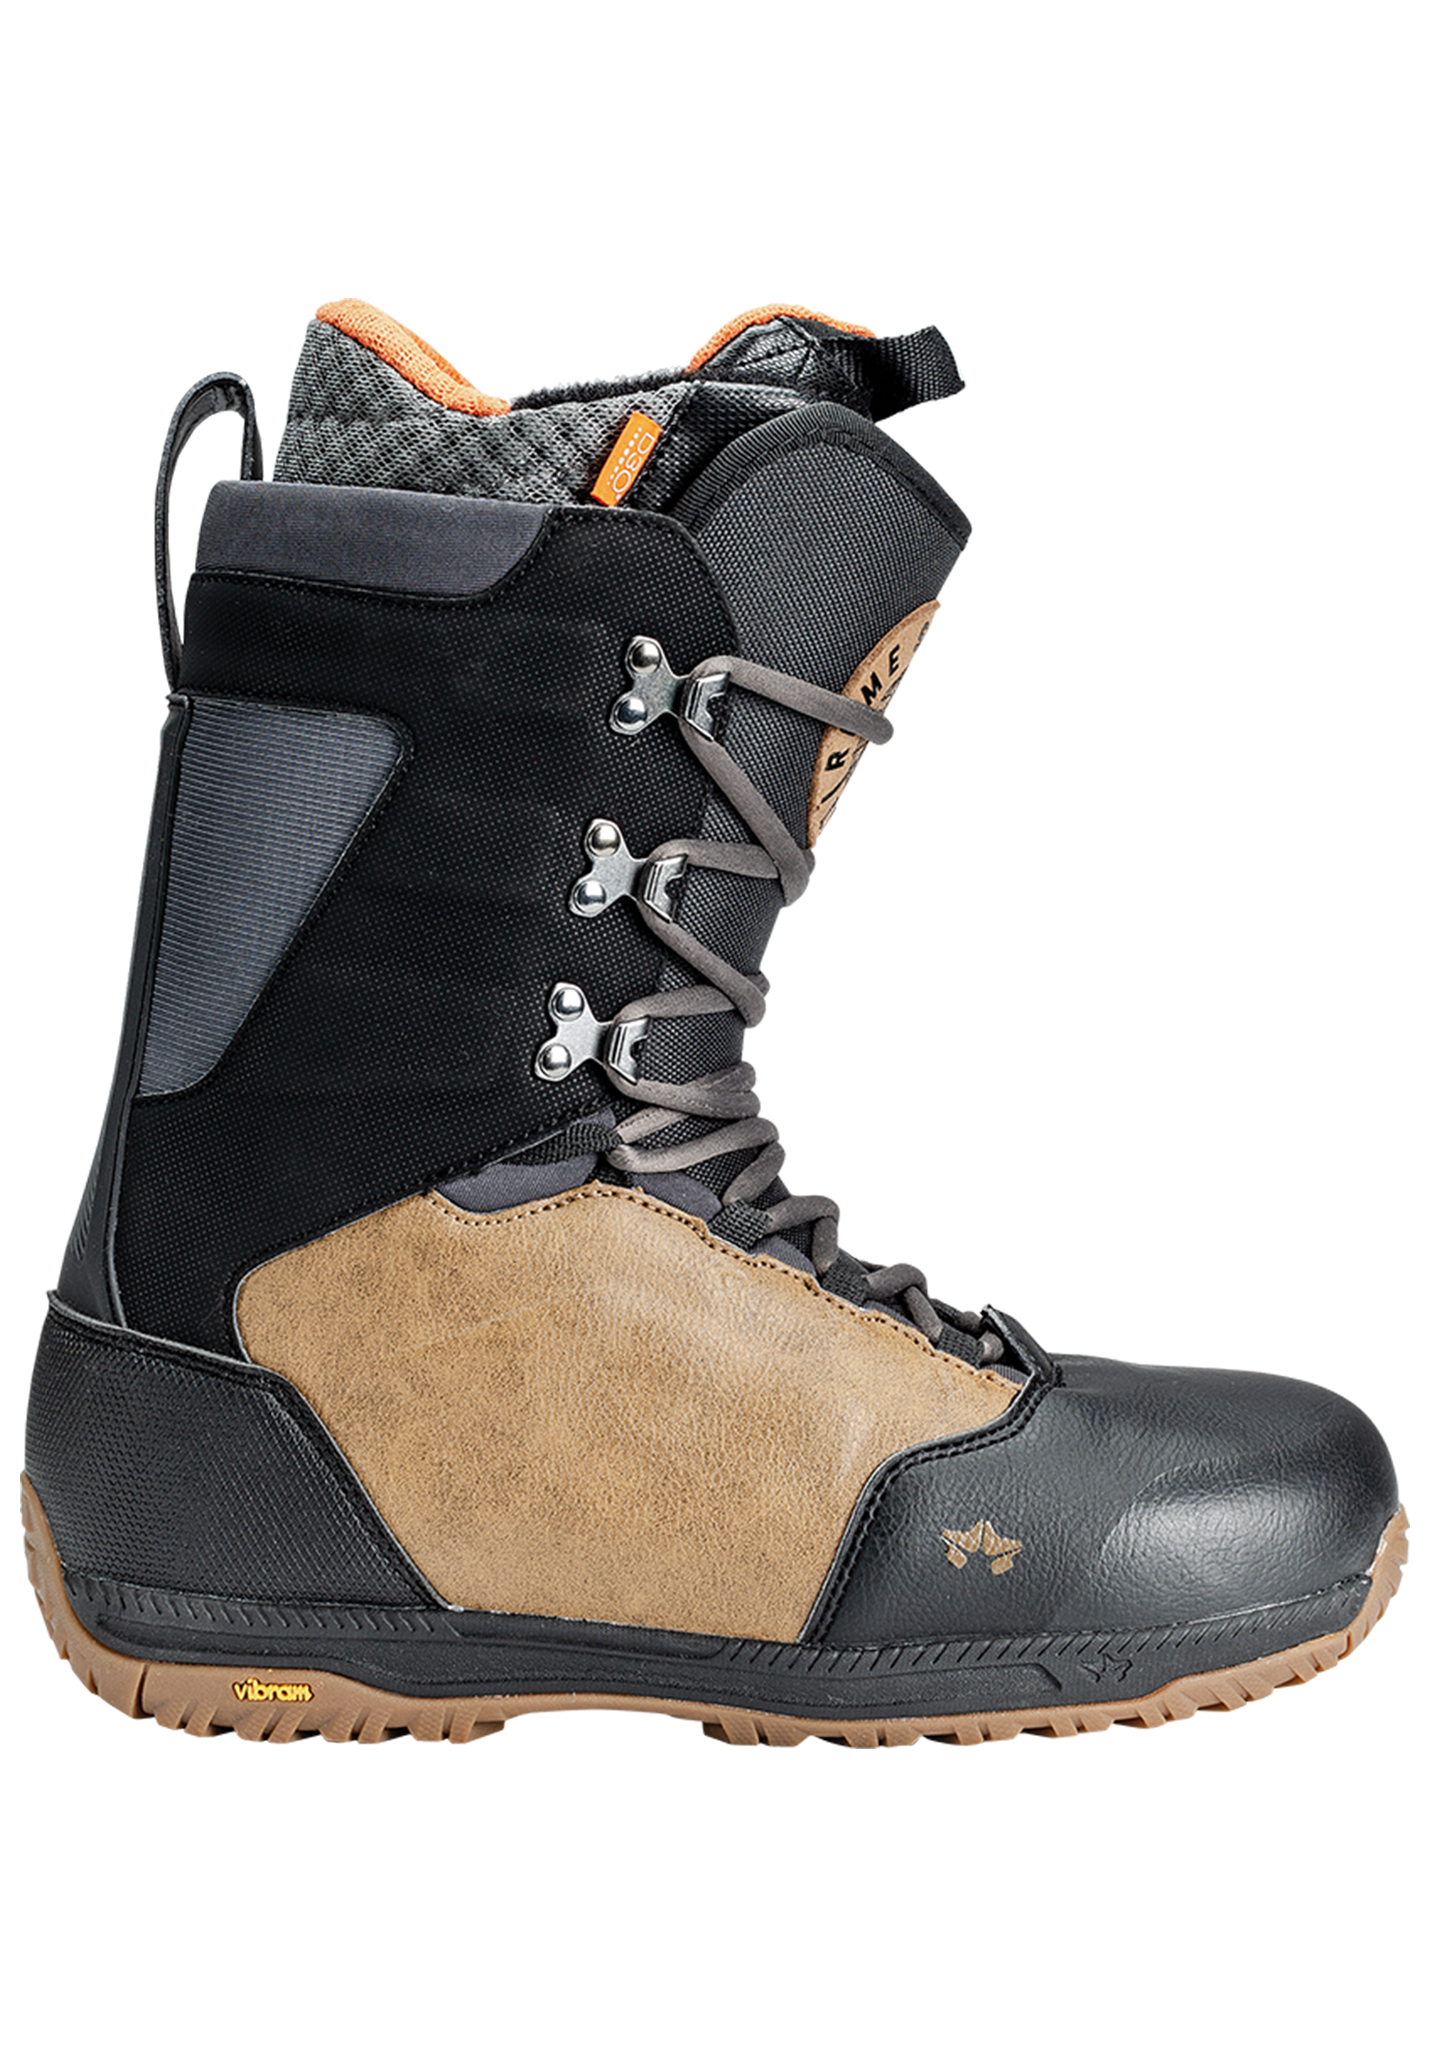 Rome Libertine All Mountain Snowboard Boots black/tan 42,5